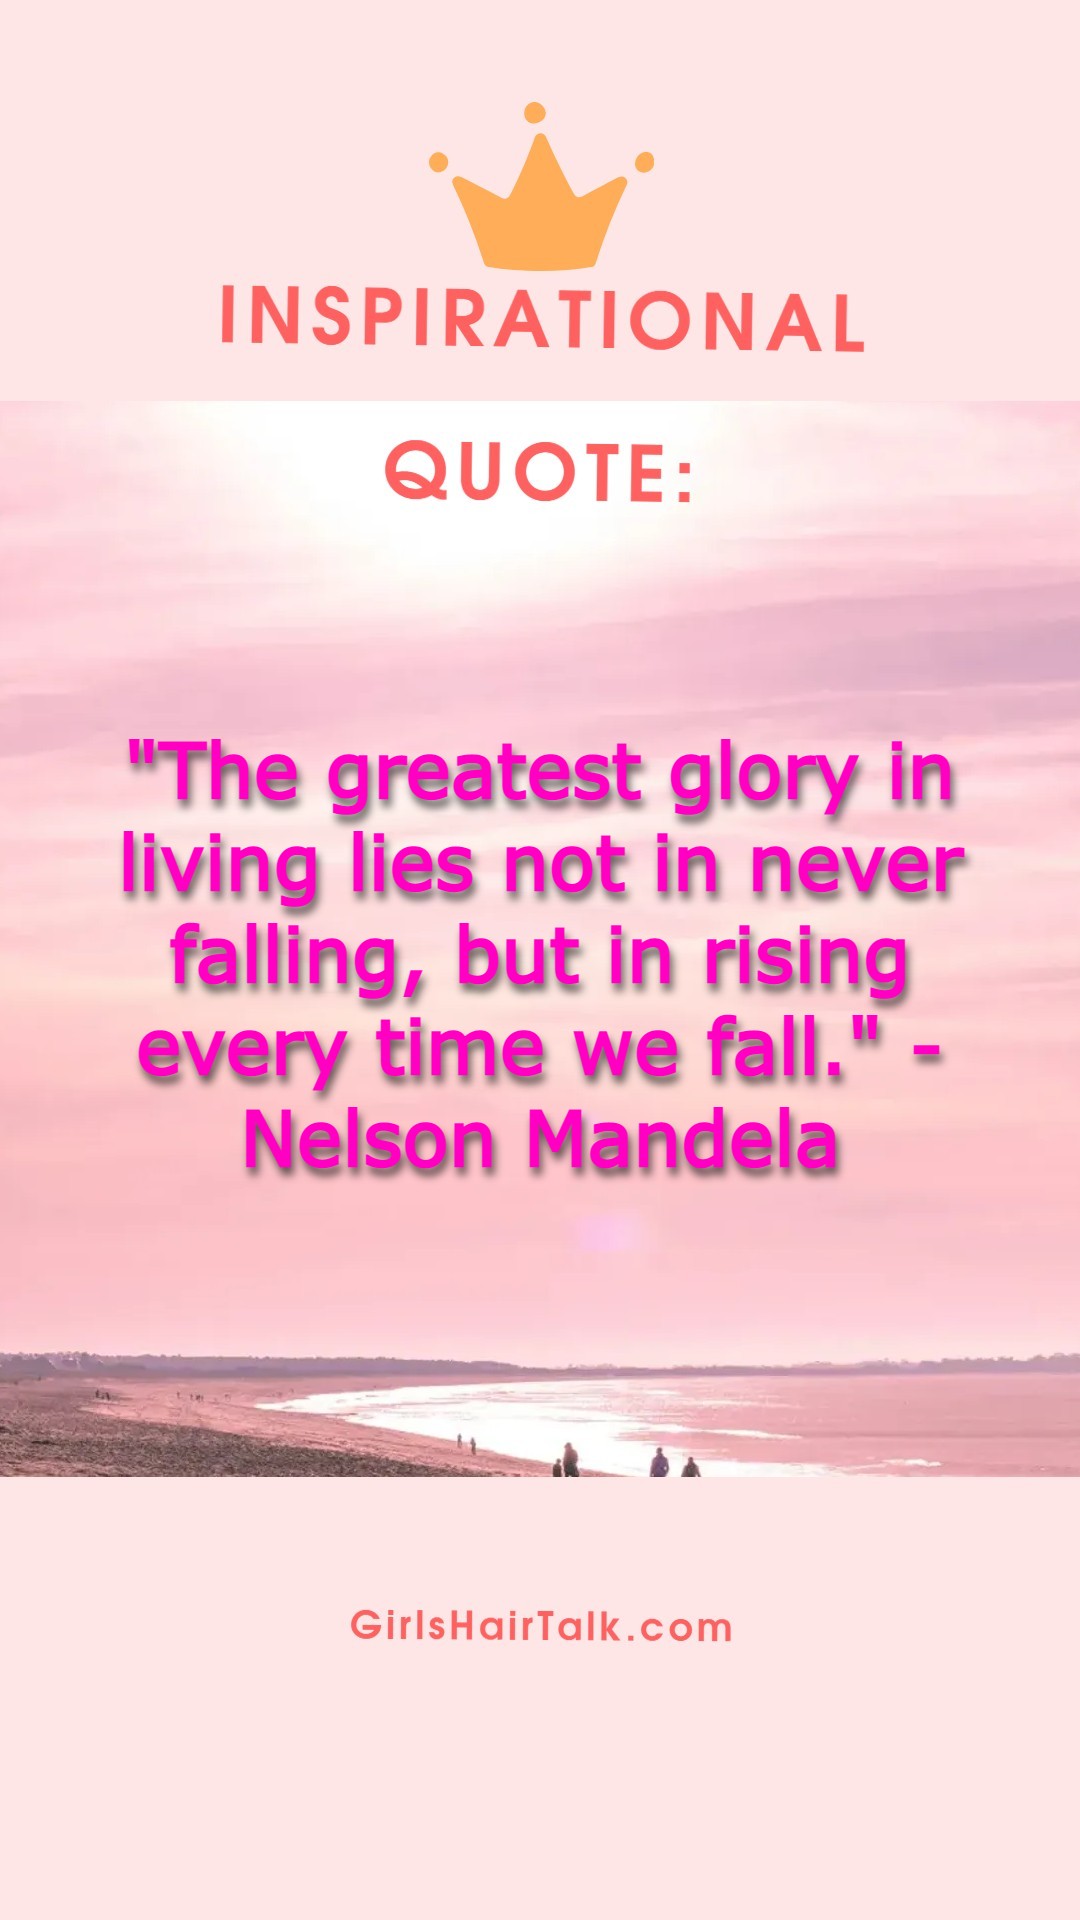 Nelson Mandela cancer quote